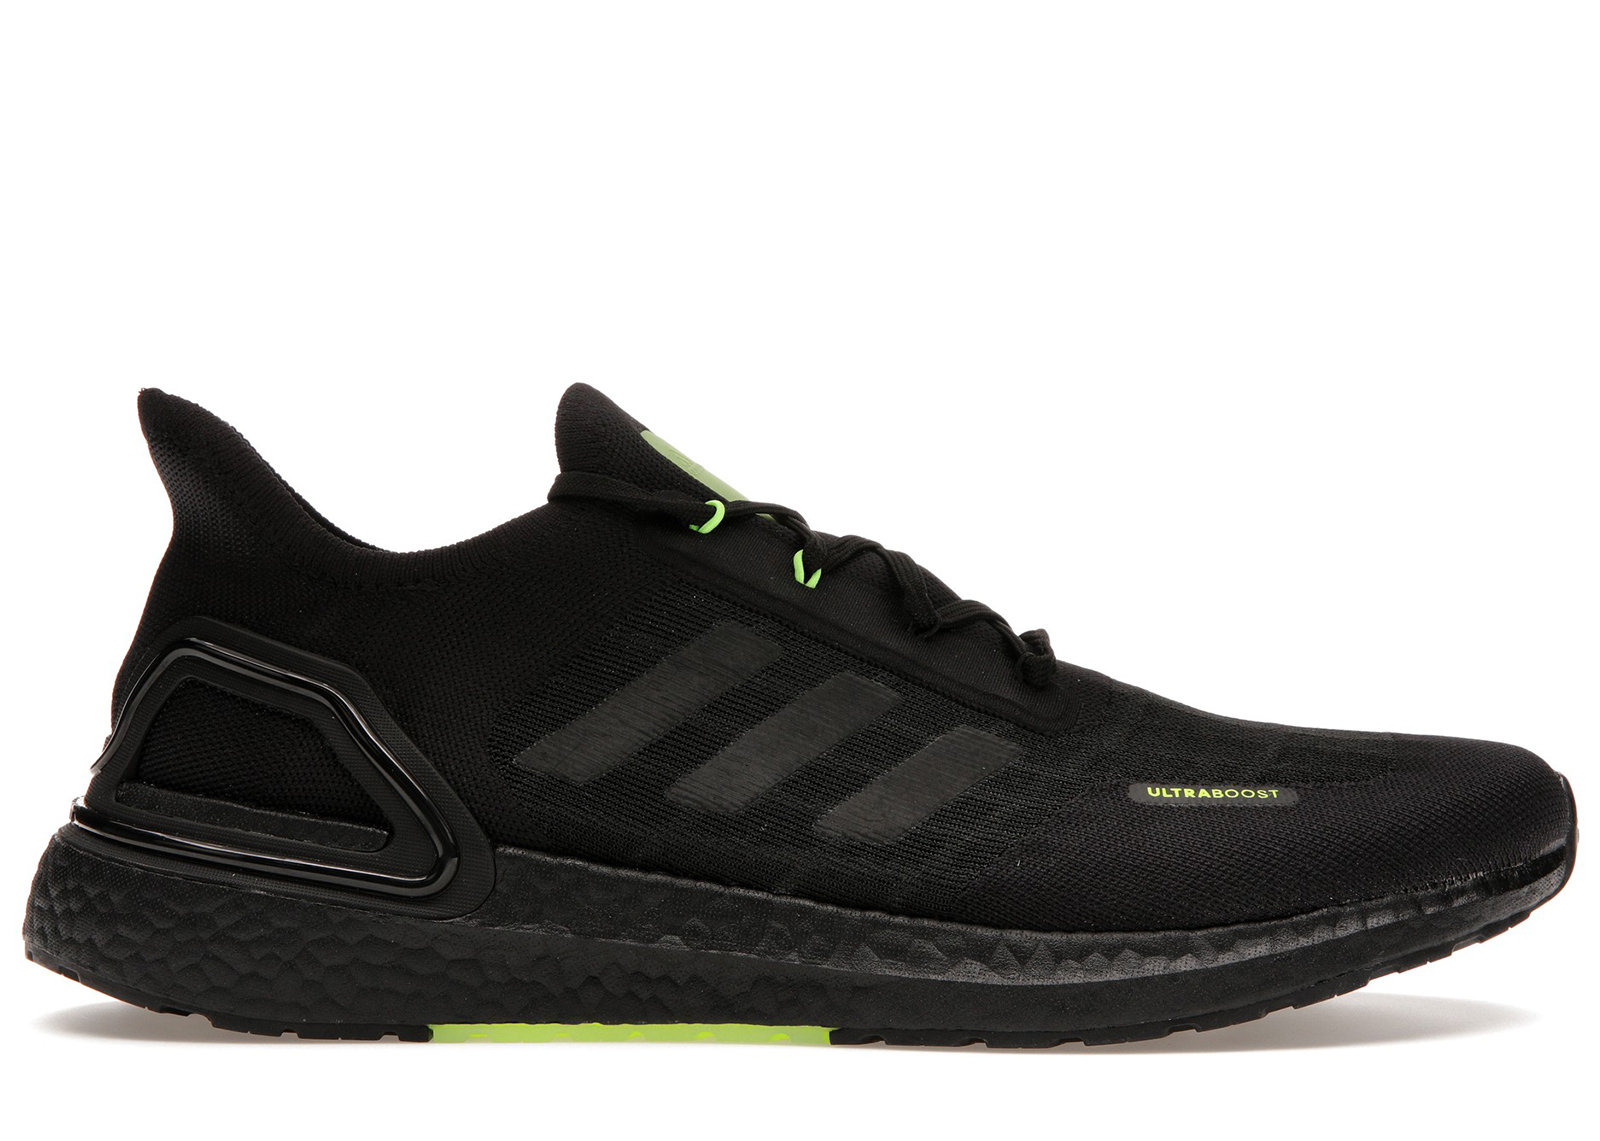 adidas boost green black